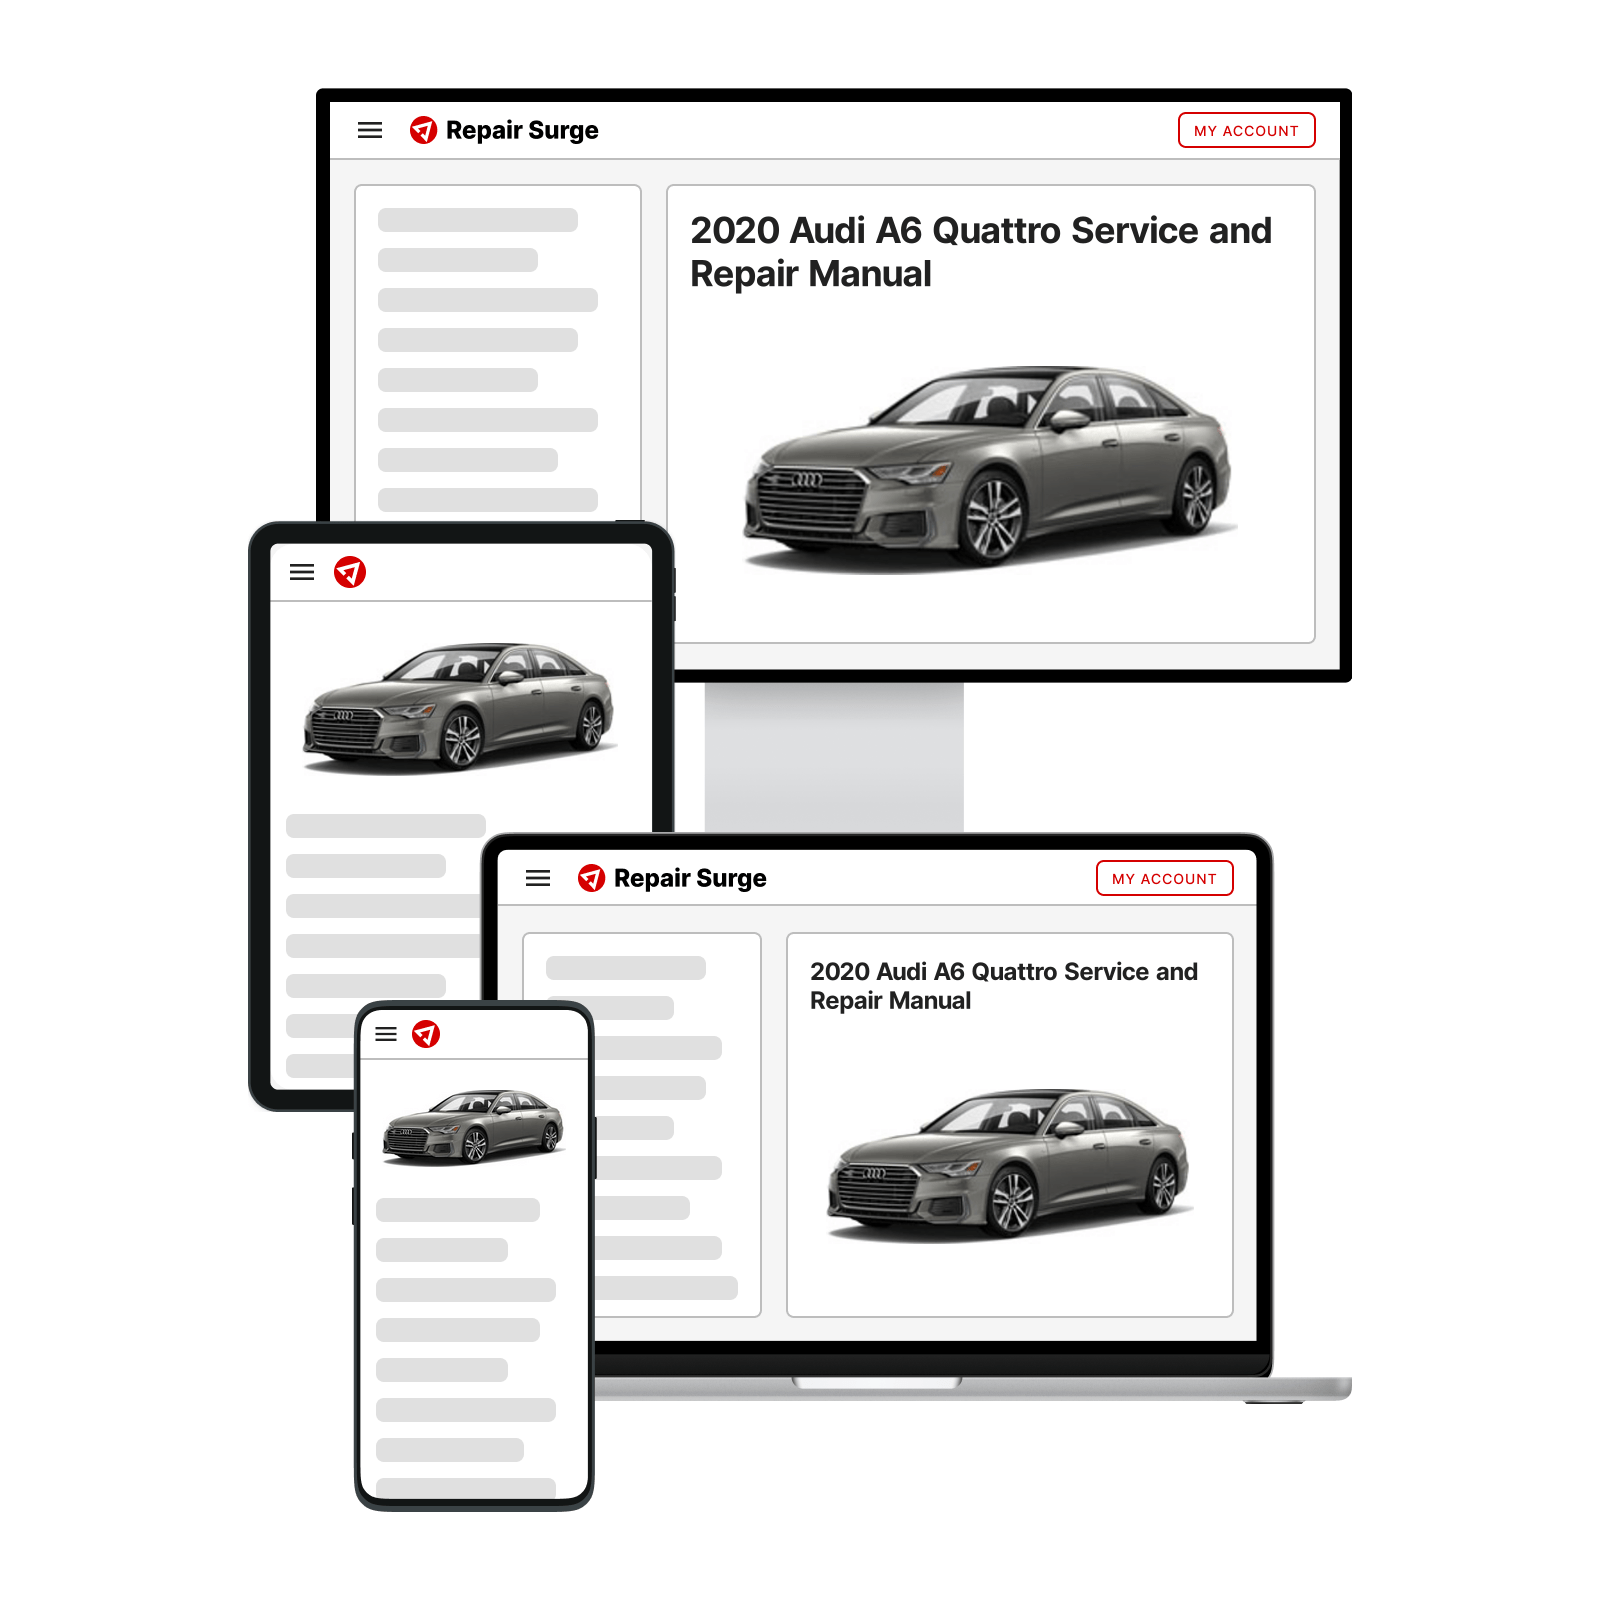 2020 Audi A6 Quattro service and repair manual hero image